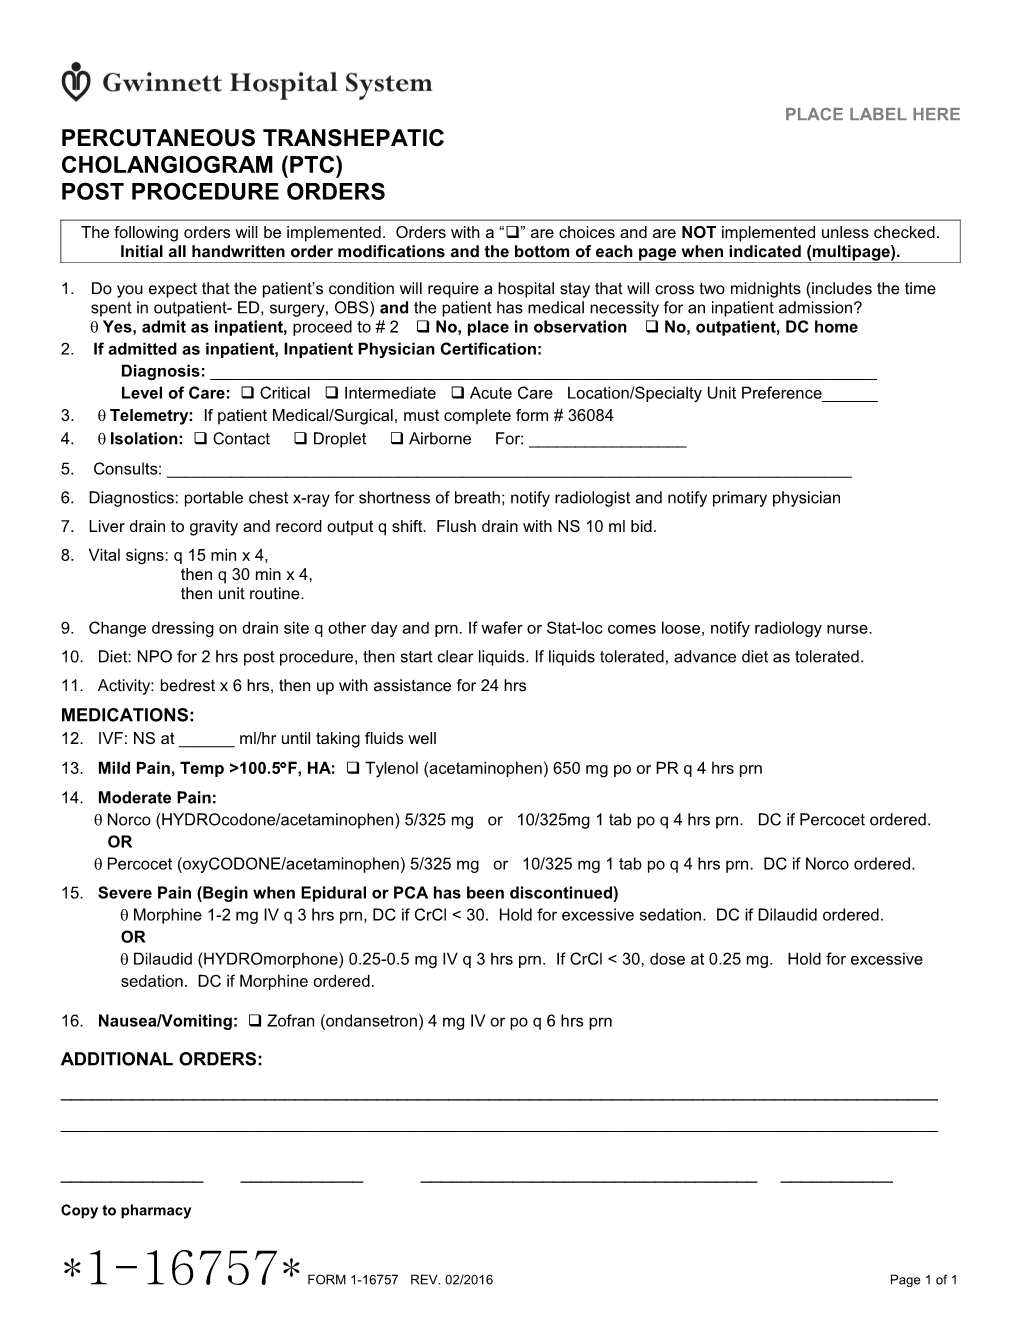 Percutaneous Transhepatic Cholangiogram (PTC) Post Procedure Orders